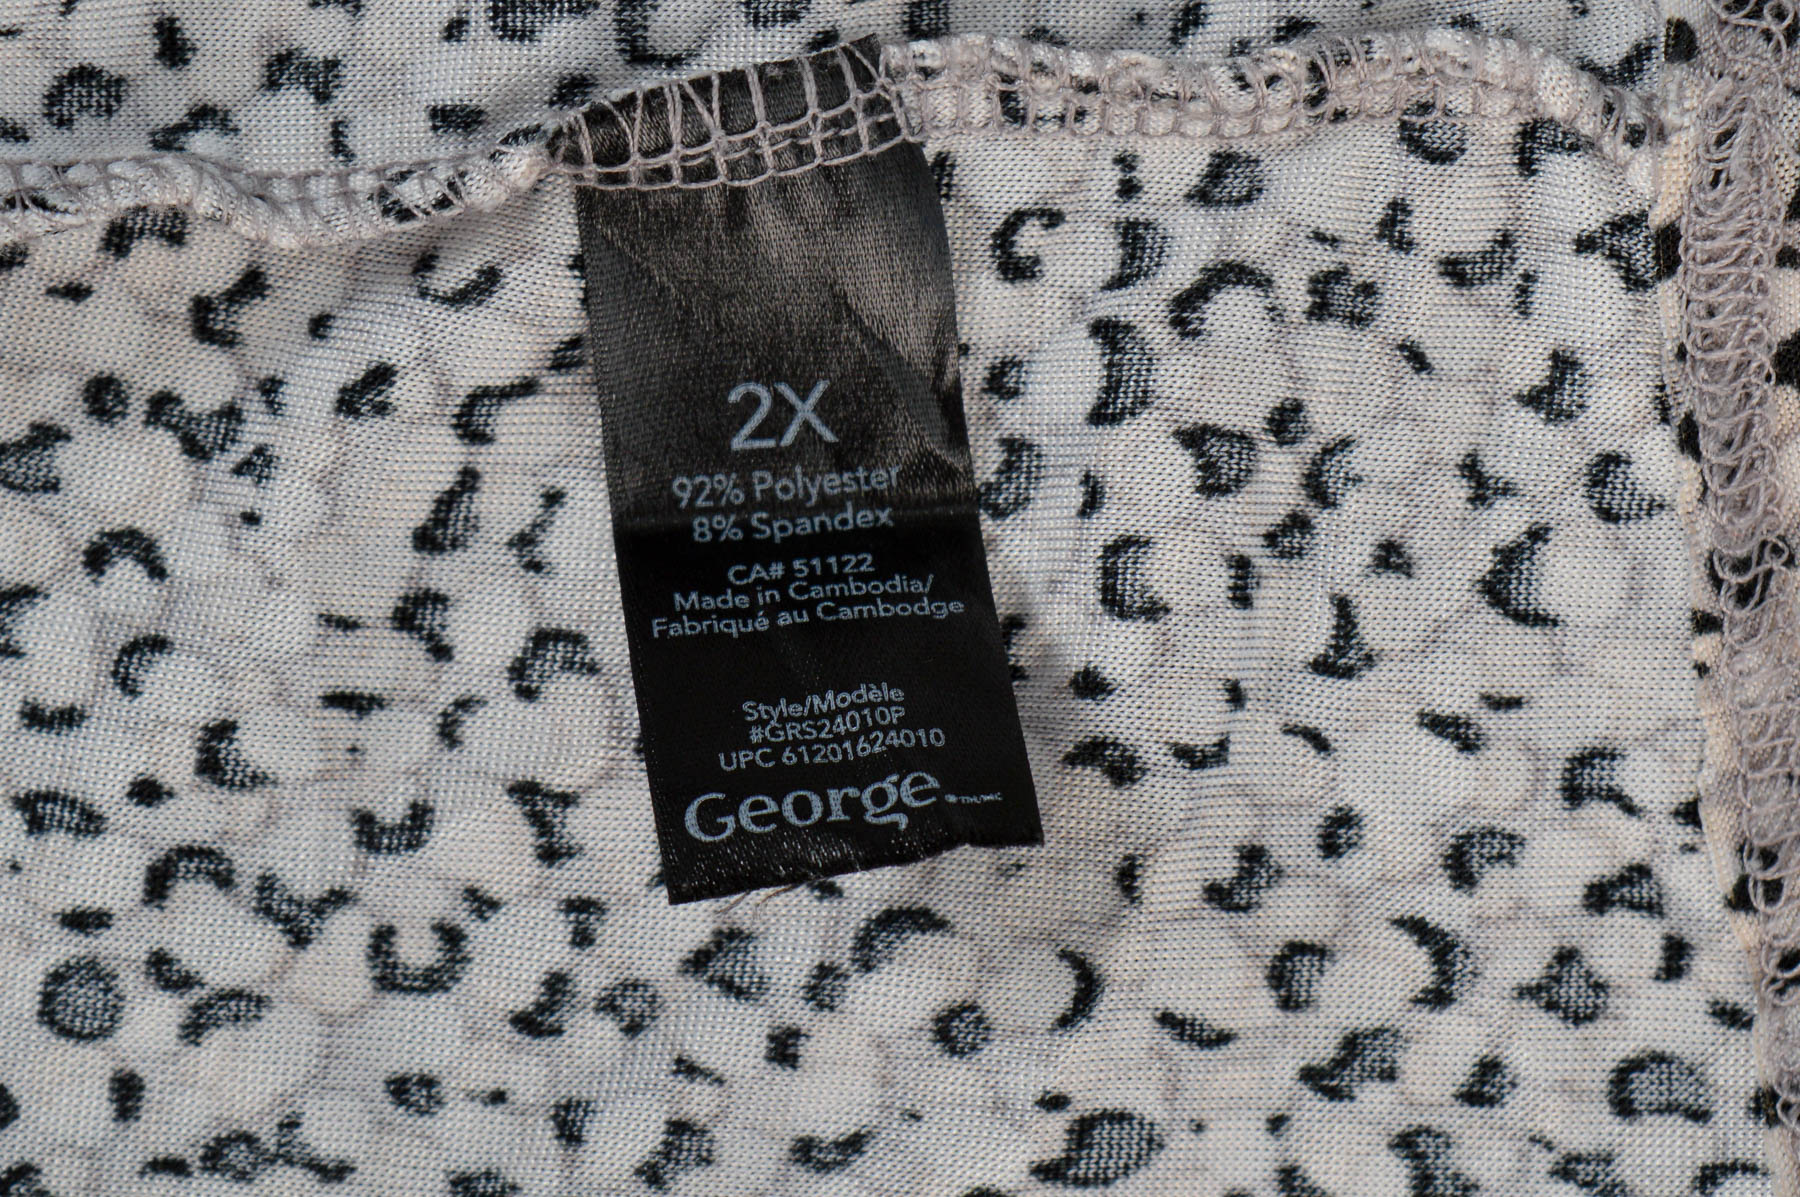 Dress - George. - 2